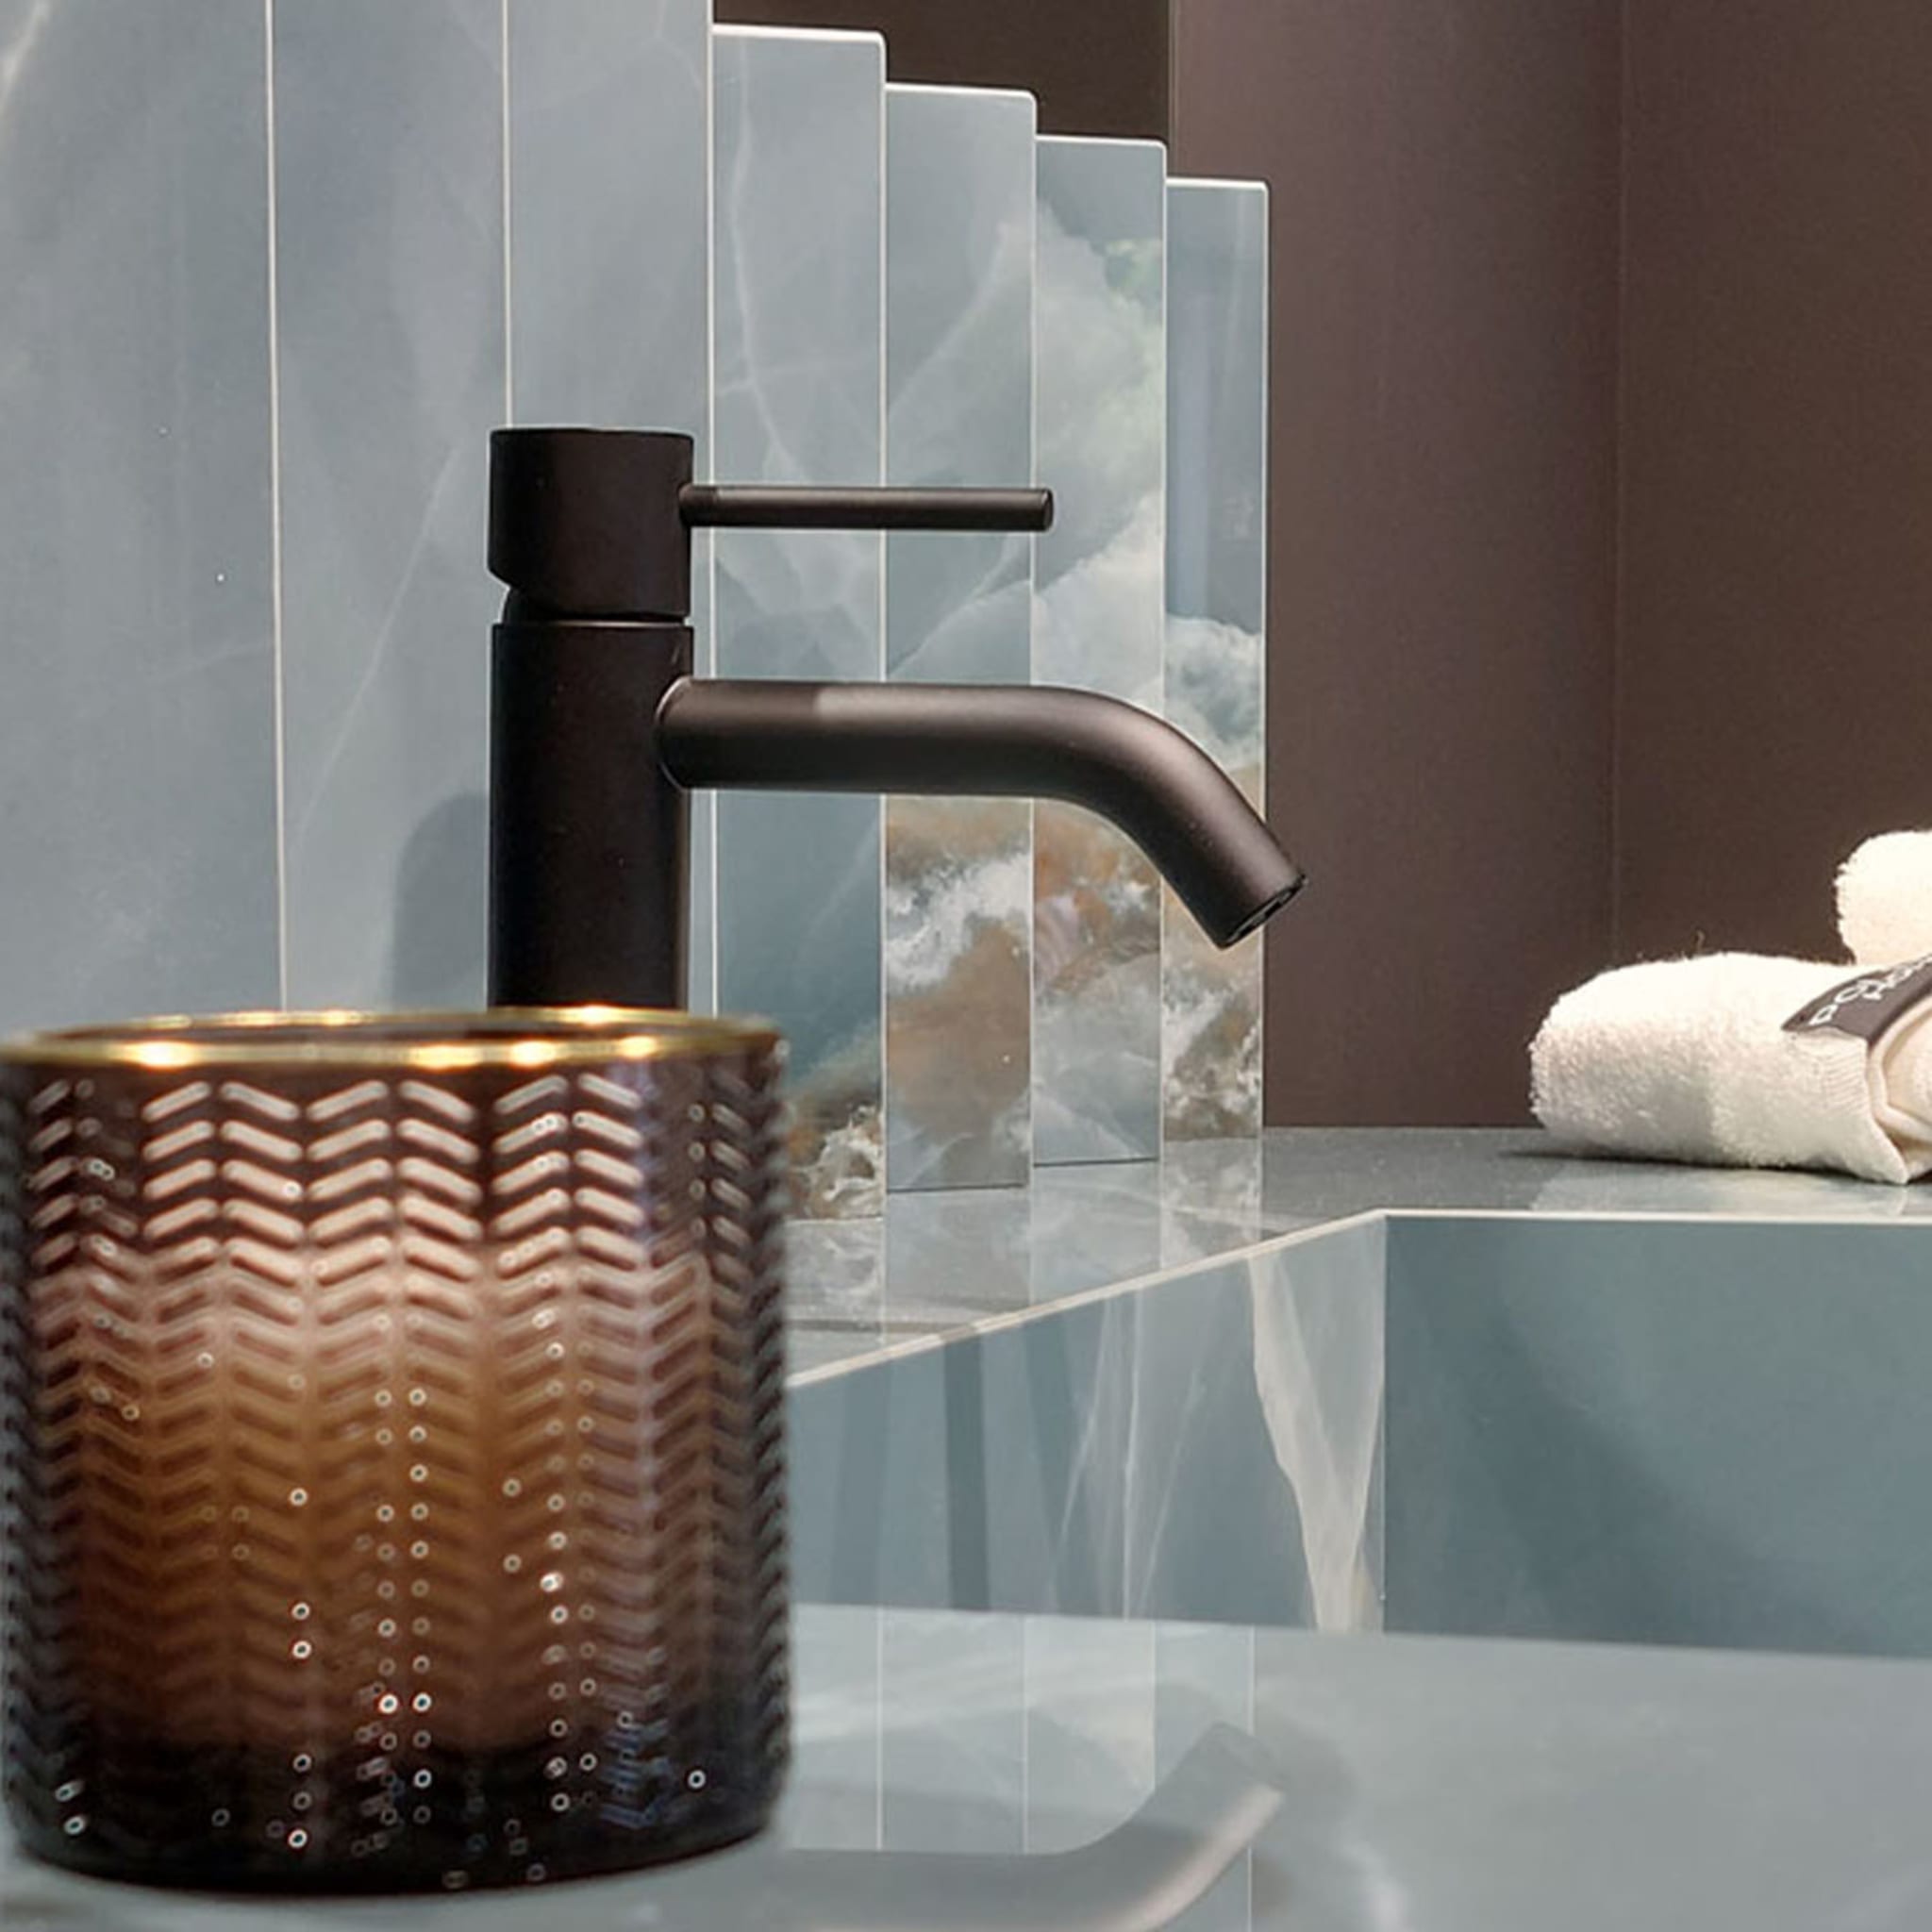 Ratio Bathroom Sink with Backsplash by Sapiens Design - Alternative view 1